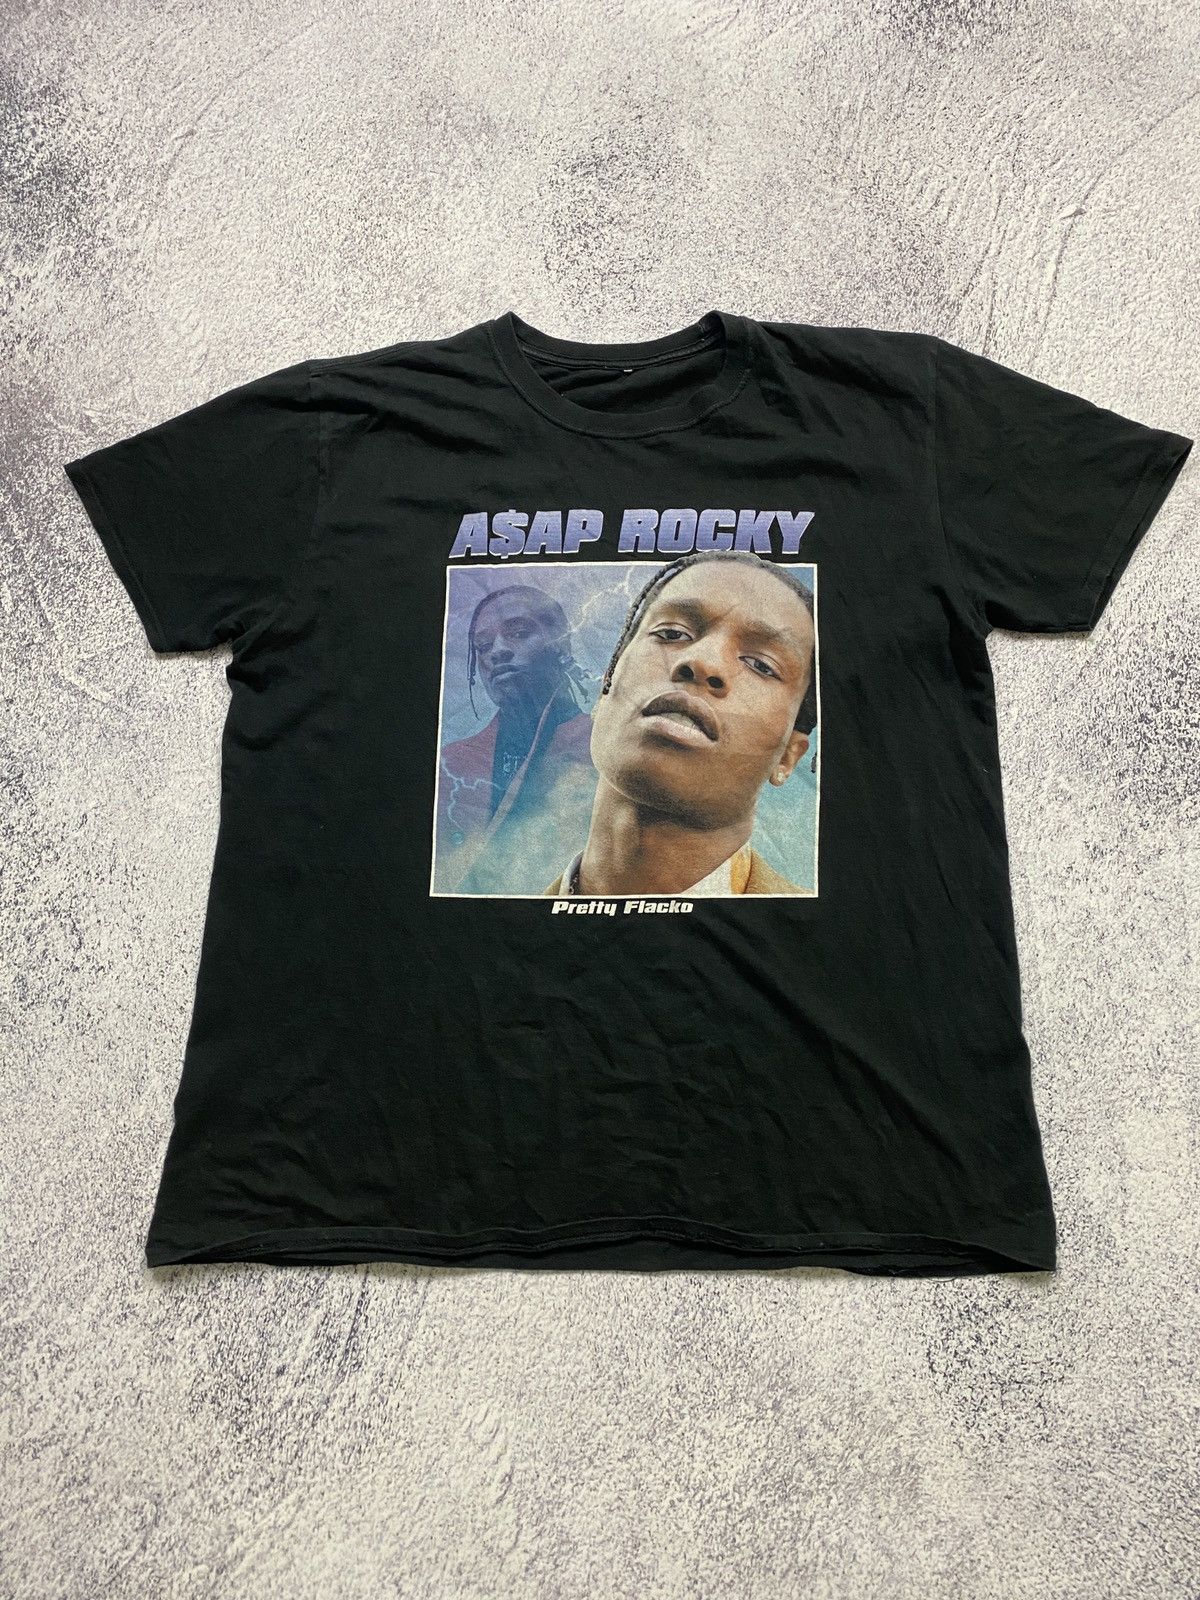 Guess Asap Rocky Pretty Flacko T-Shirt | Grailed